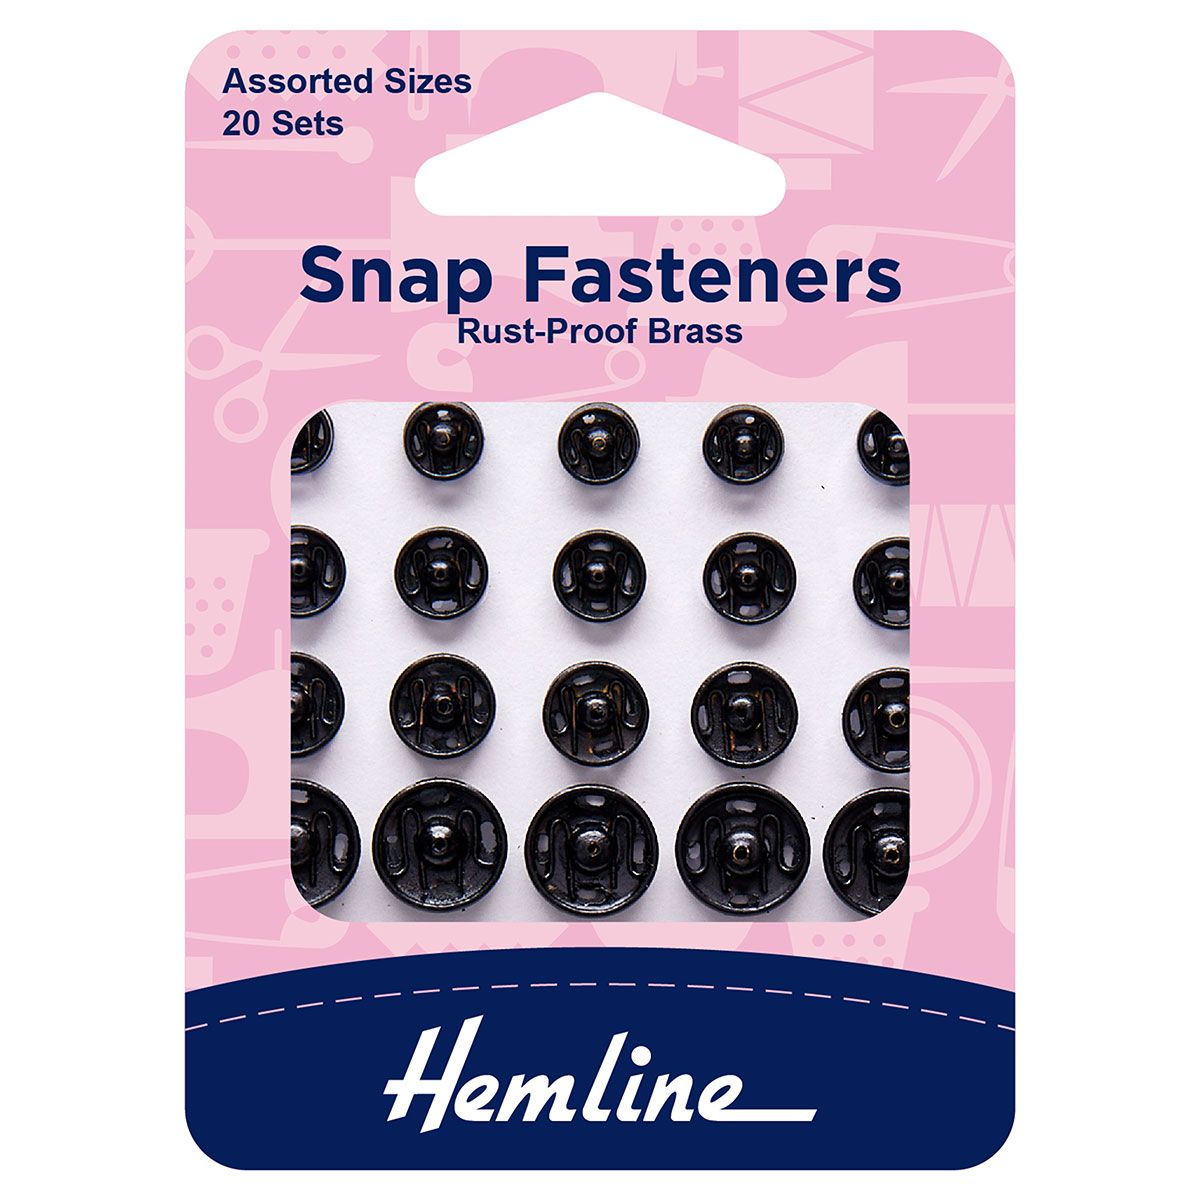 Hemline Snap Fasteners Black - Assorted Sizes